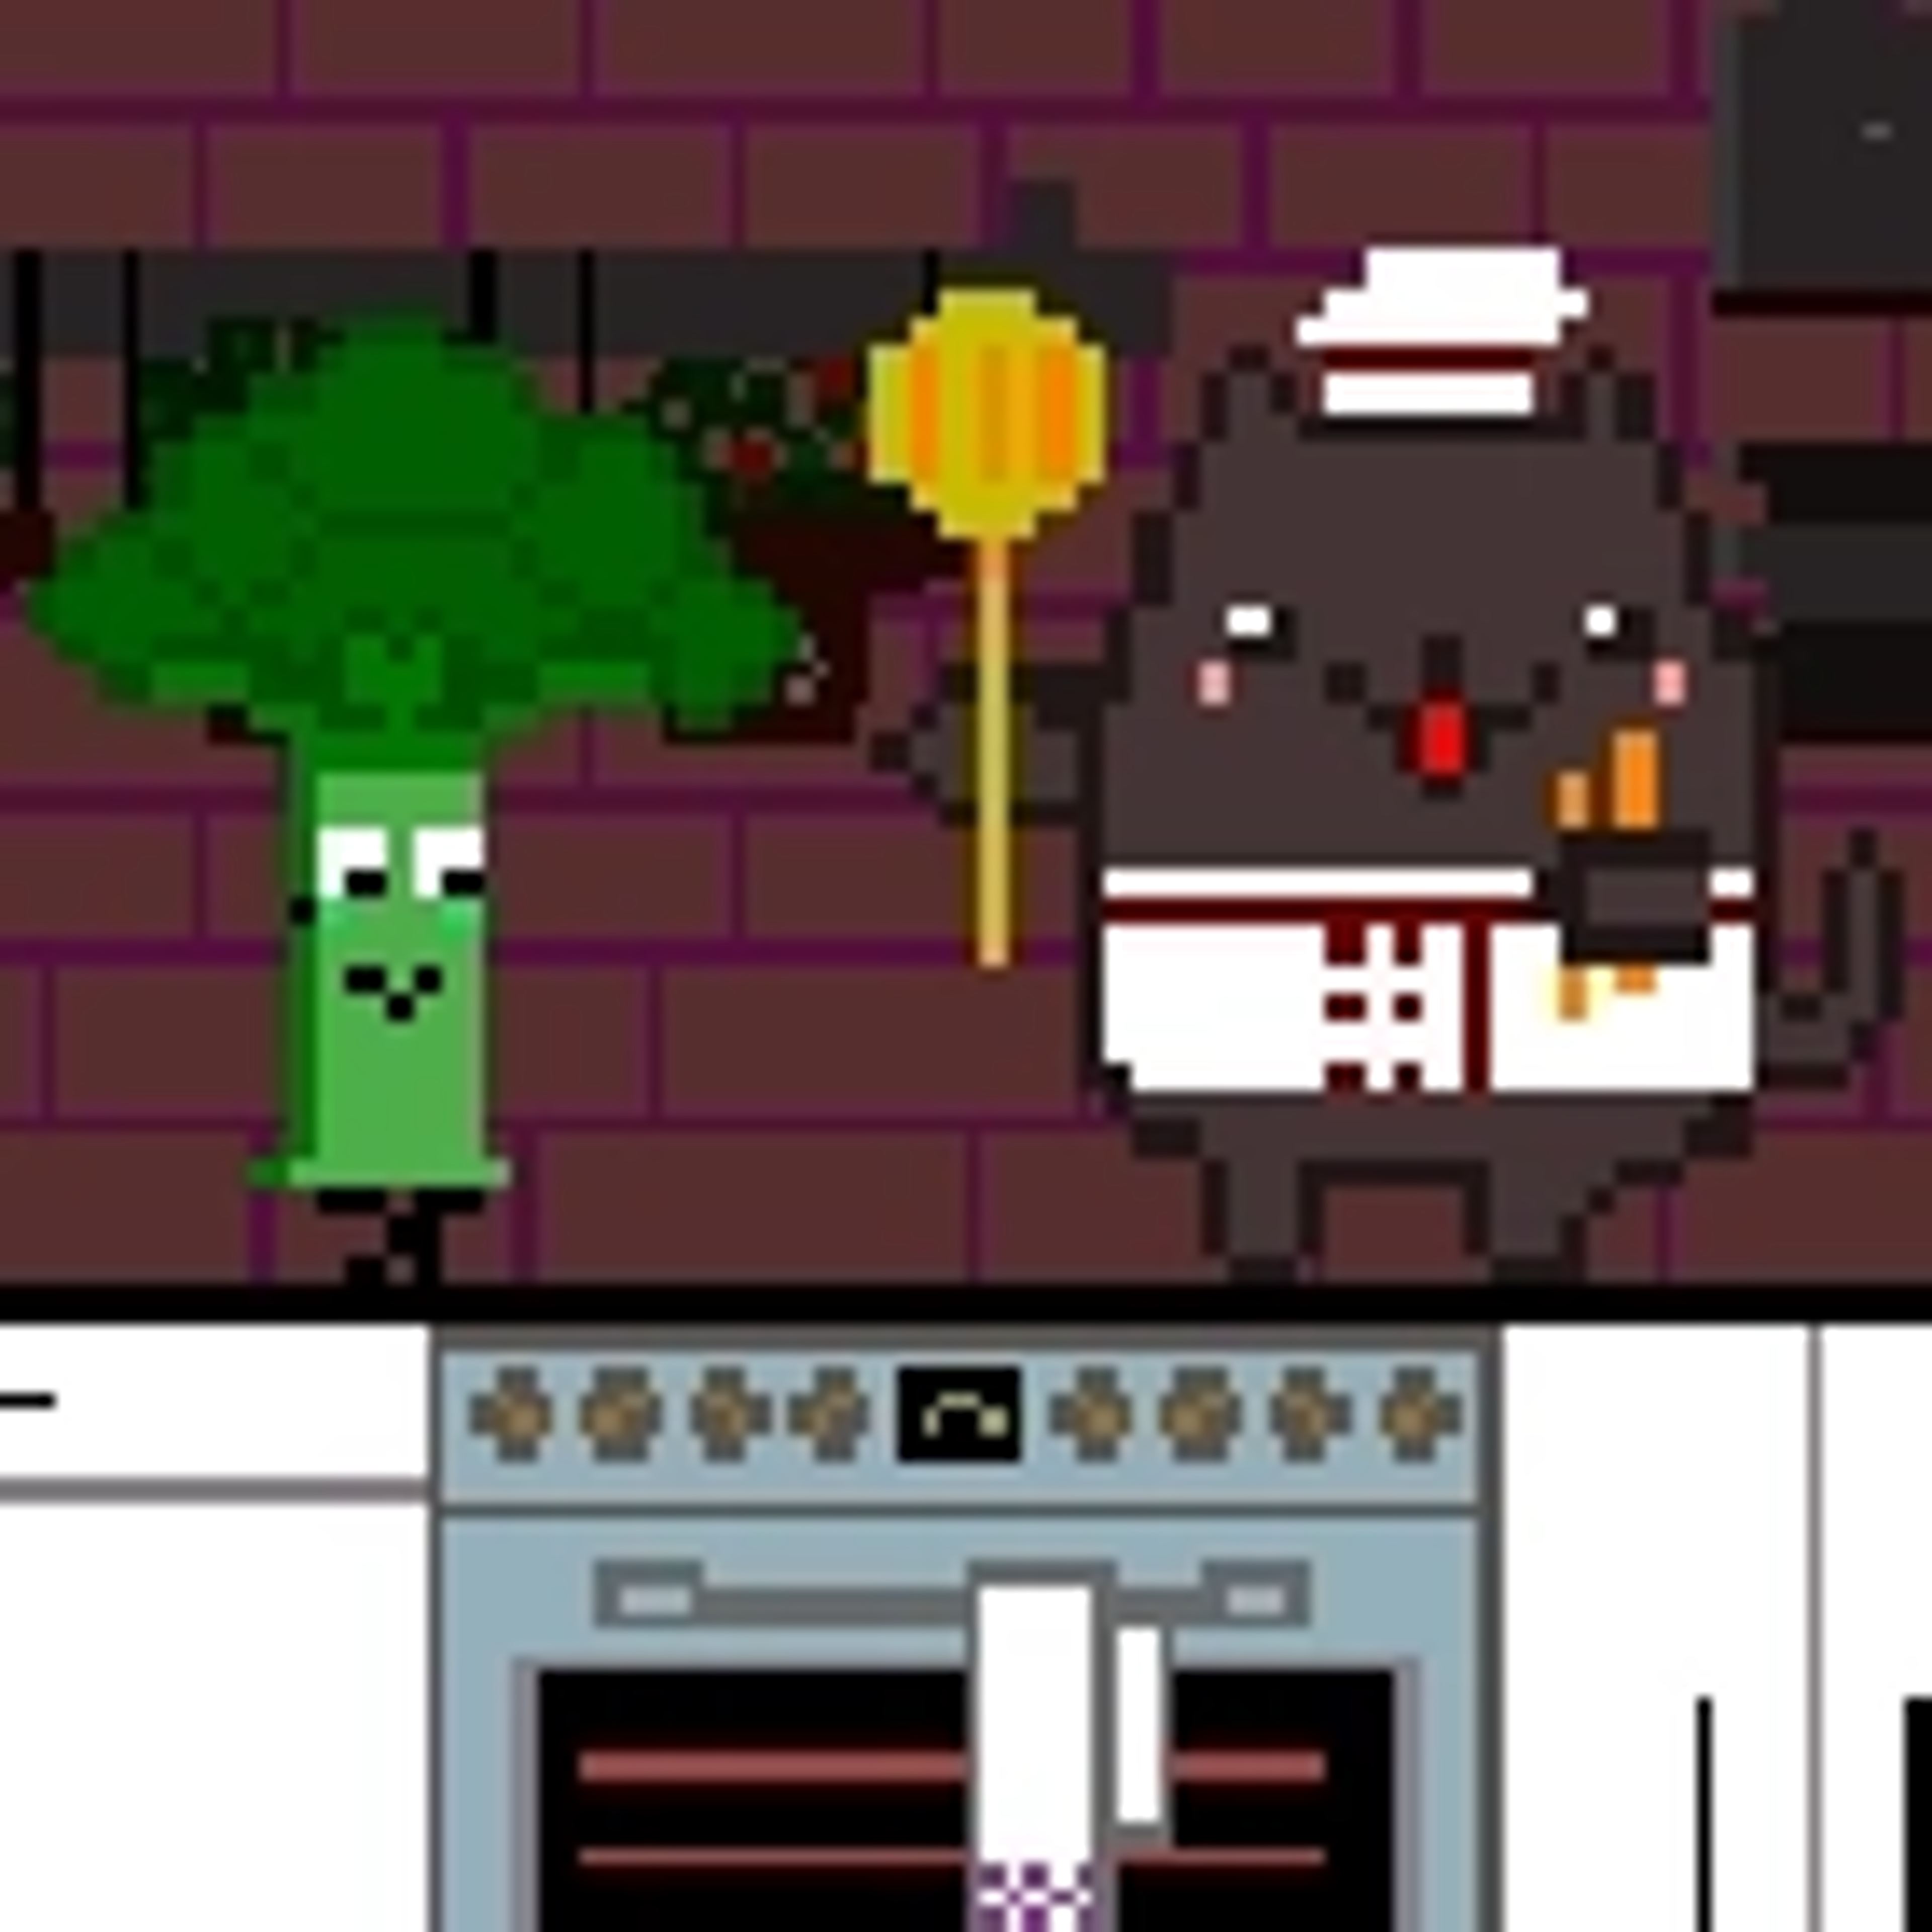 Cat Chef and Broccoli